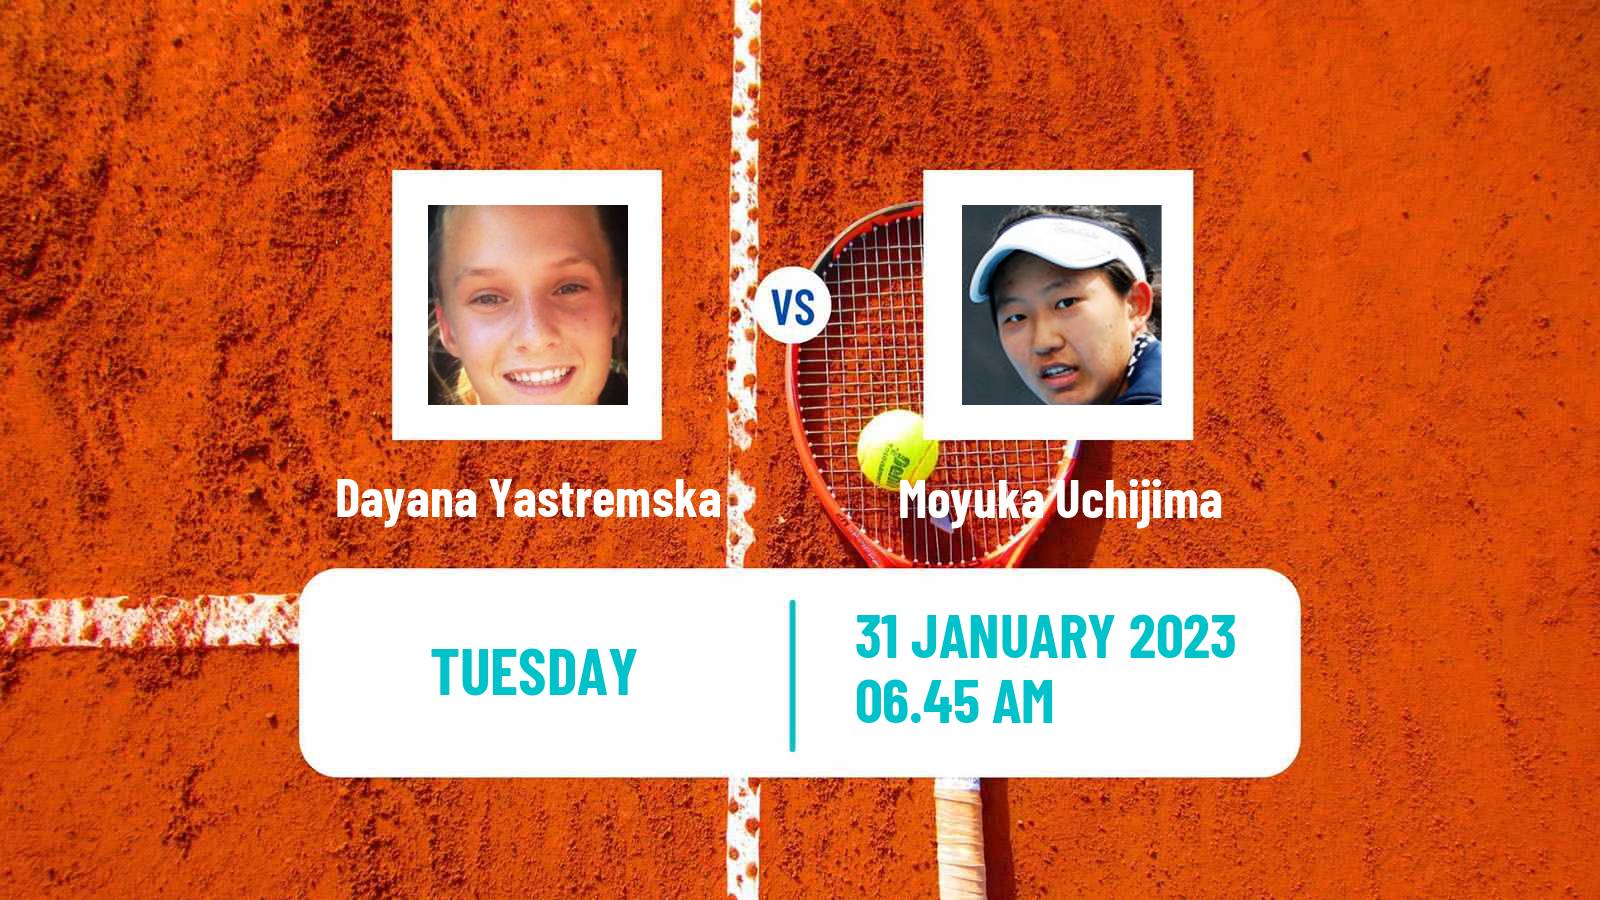 Tennis WTA Hua Hin Dayana Yastremska - Moyuka Uchijima